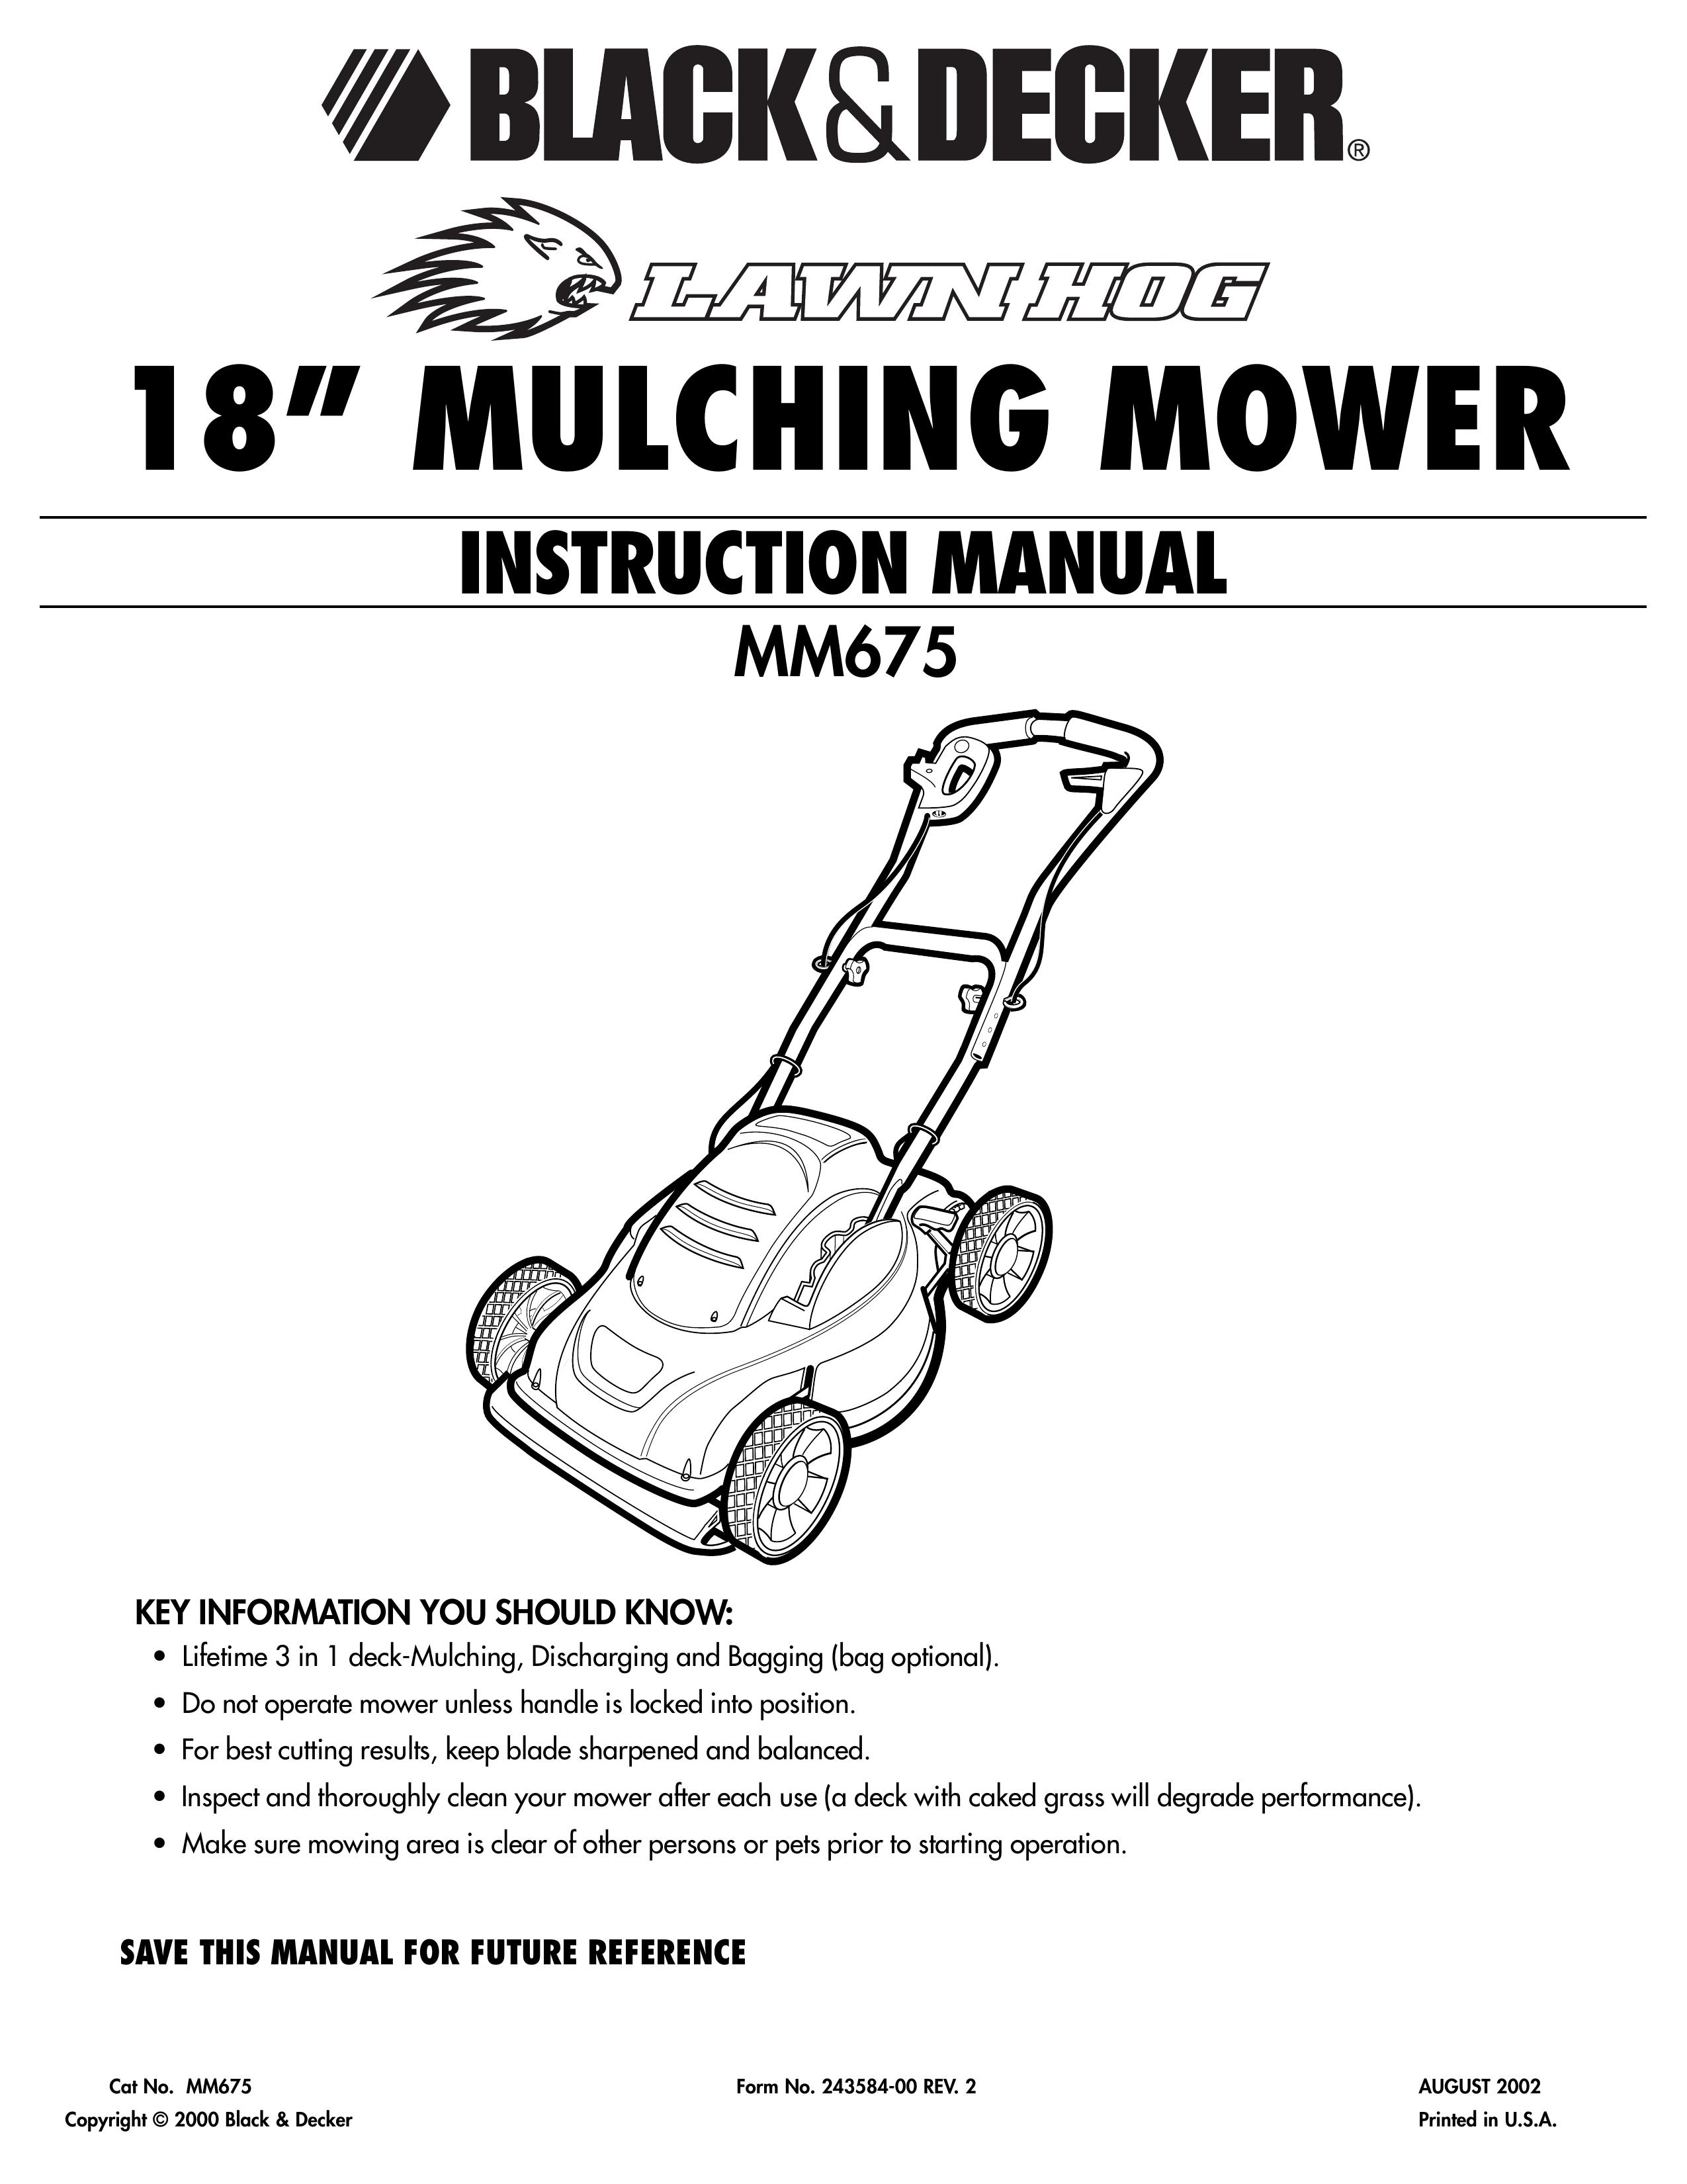 Black & Decker MM675 Lawn Mower User Manual